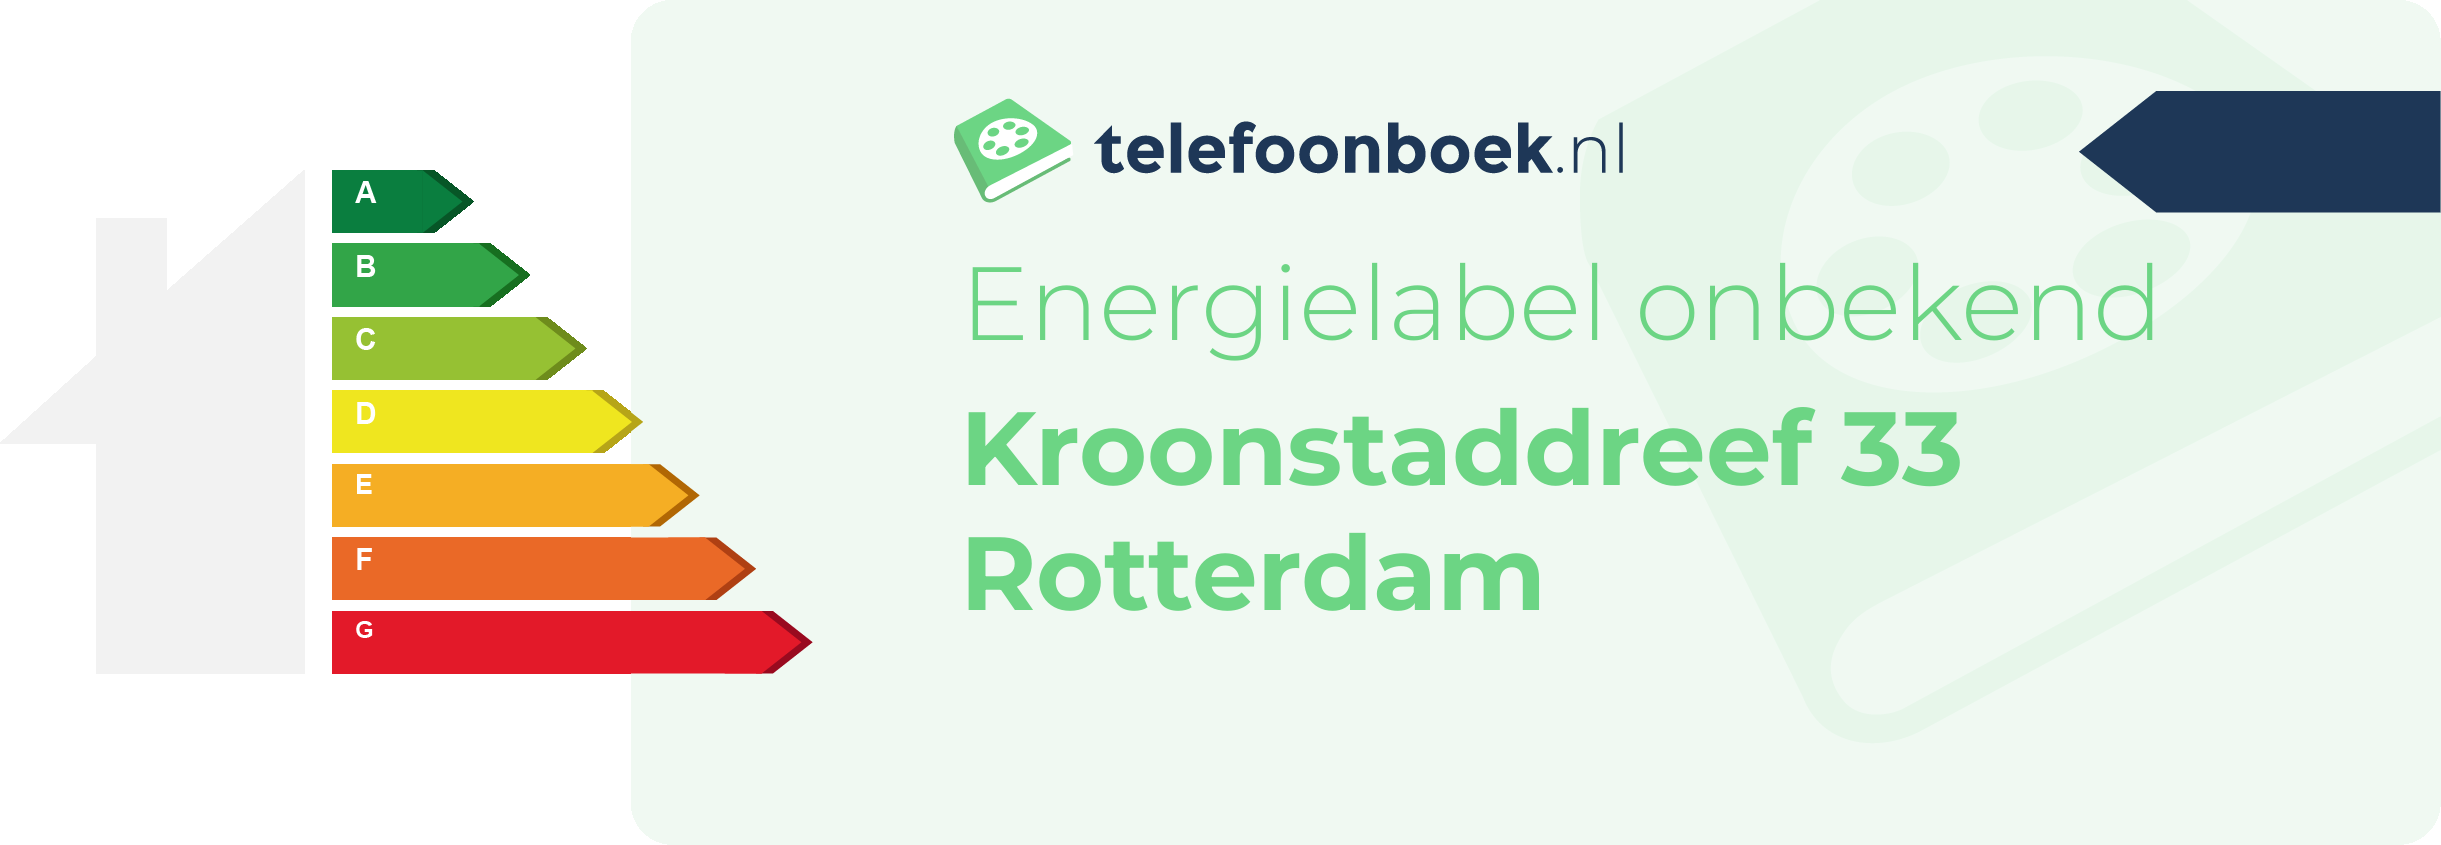 Energielabel Kroonstaddreef 33 Rotterdam